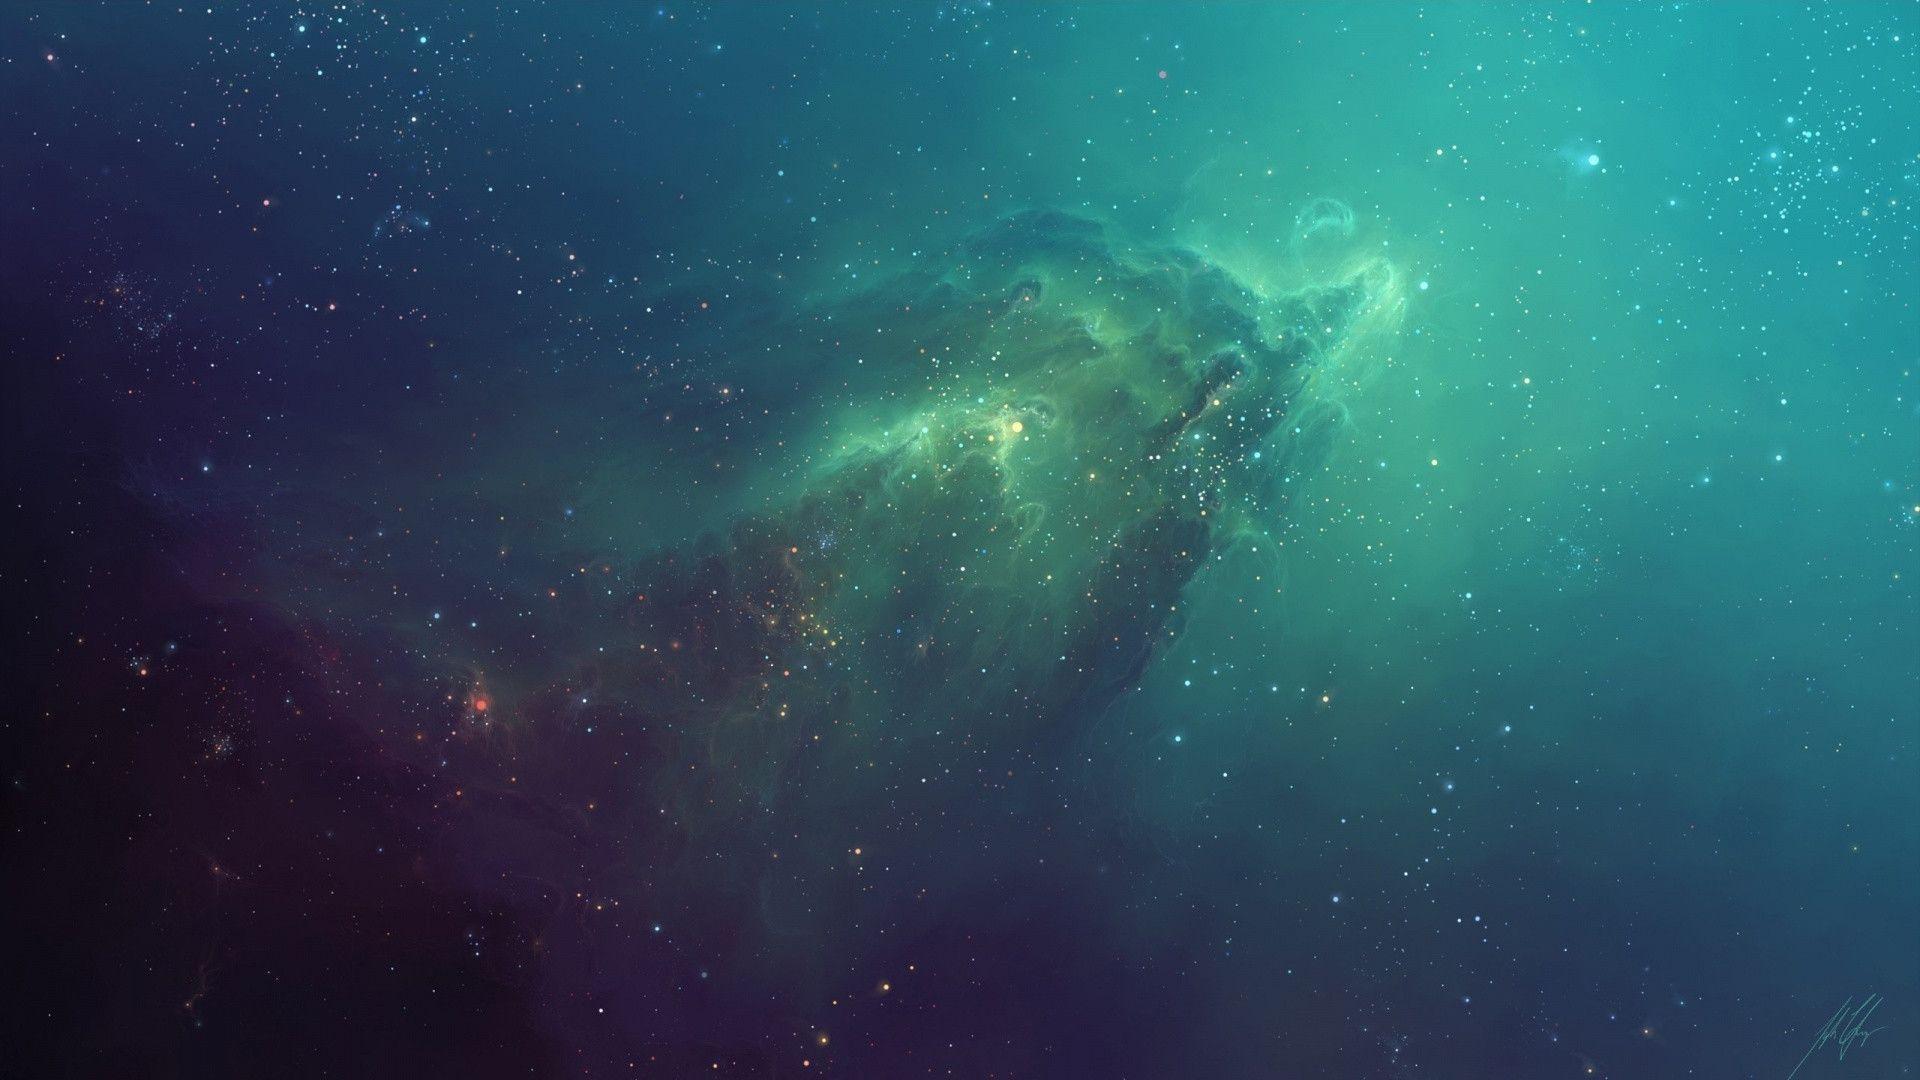 Anyone else a fan of the iOS 7 Nebula wallpaper? I created a full